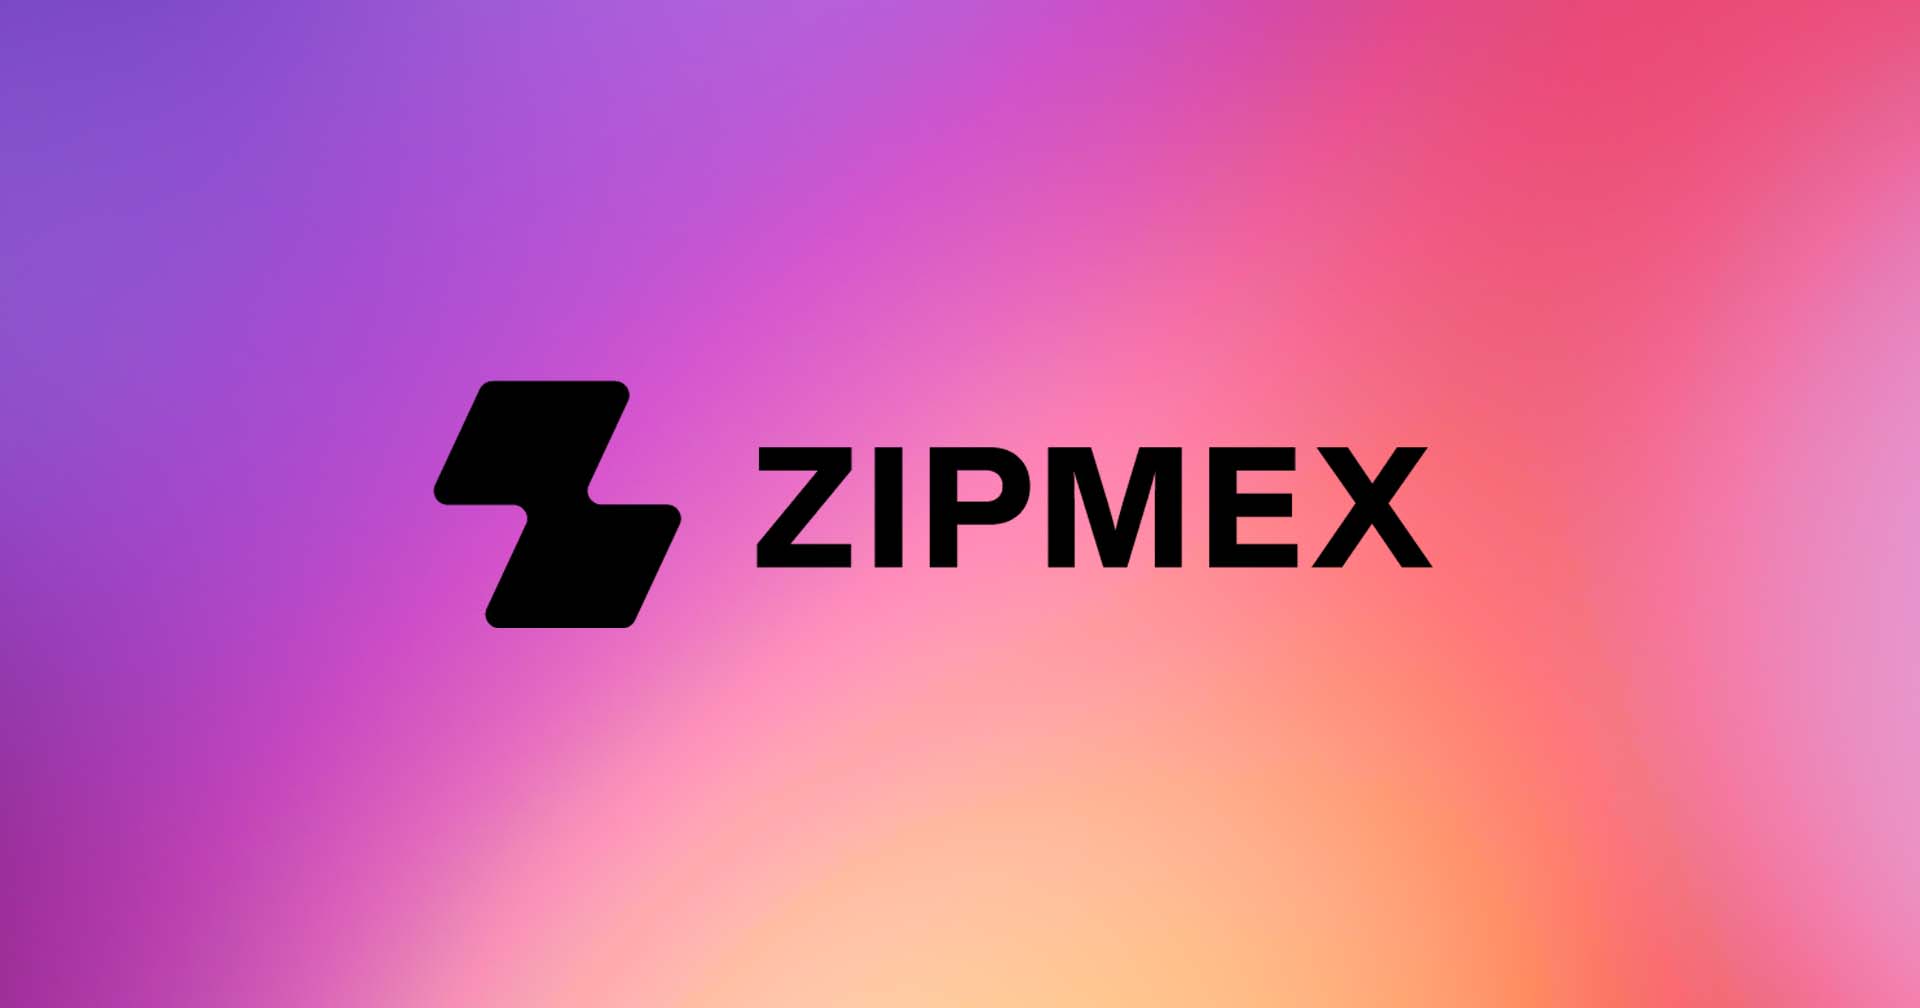 Zipmex  ทยอยคืนเหรียญ BTC และ ETH เริ่มวันนี้ 11 ส.ค. 65